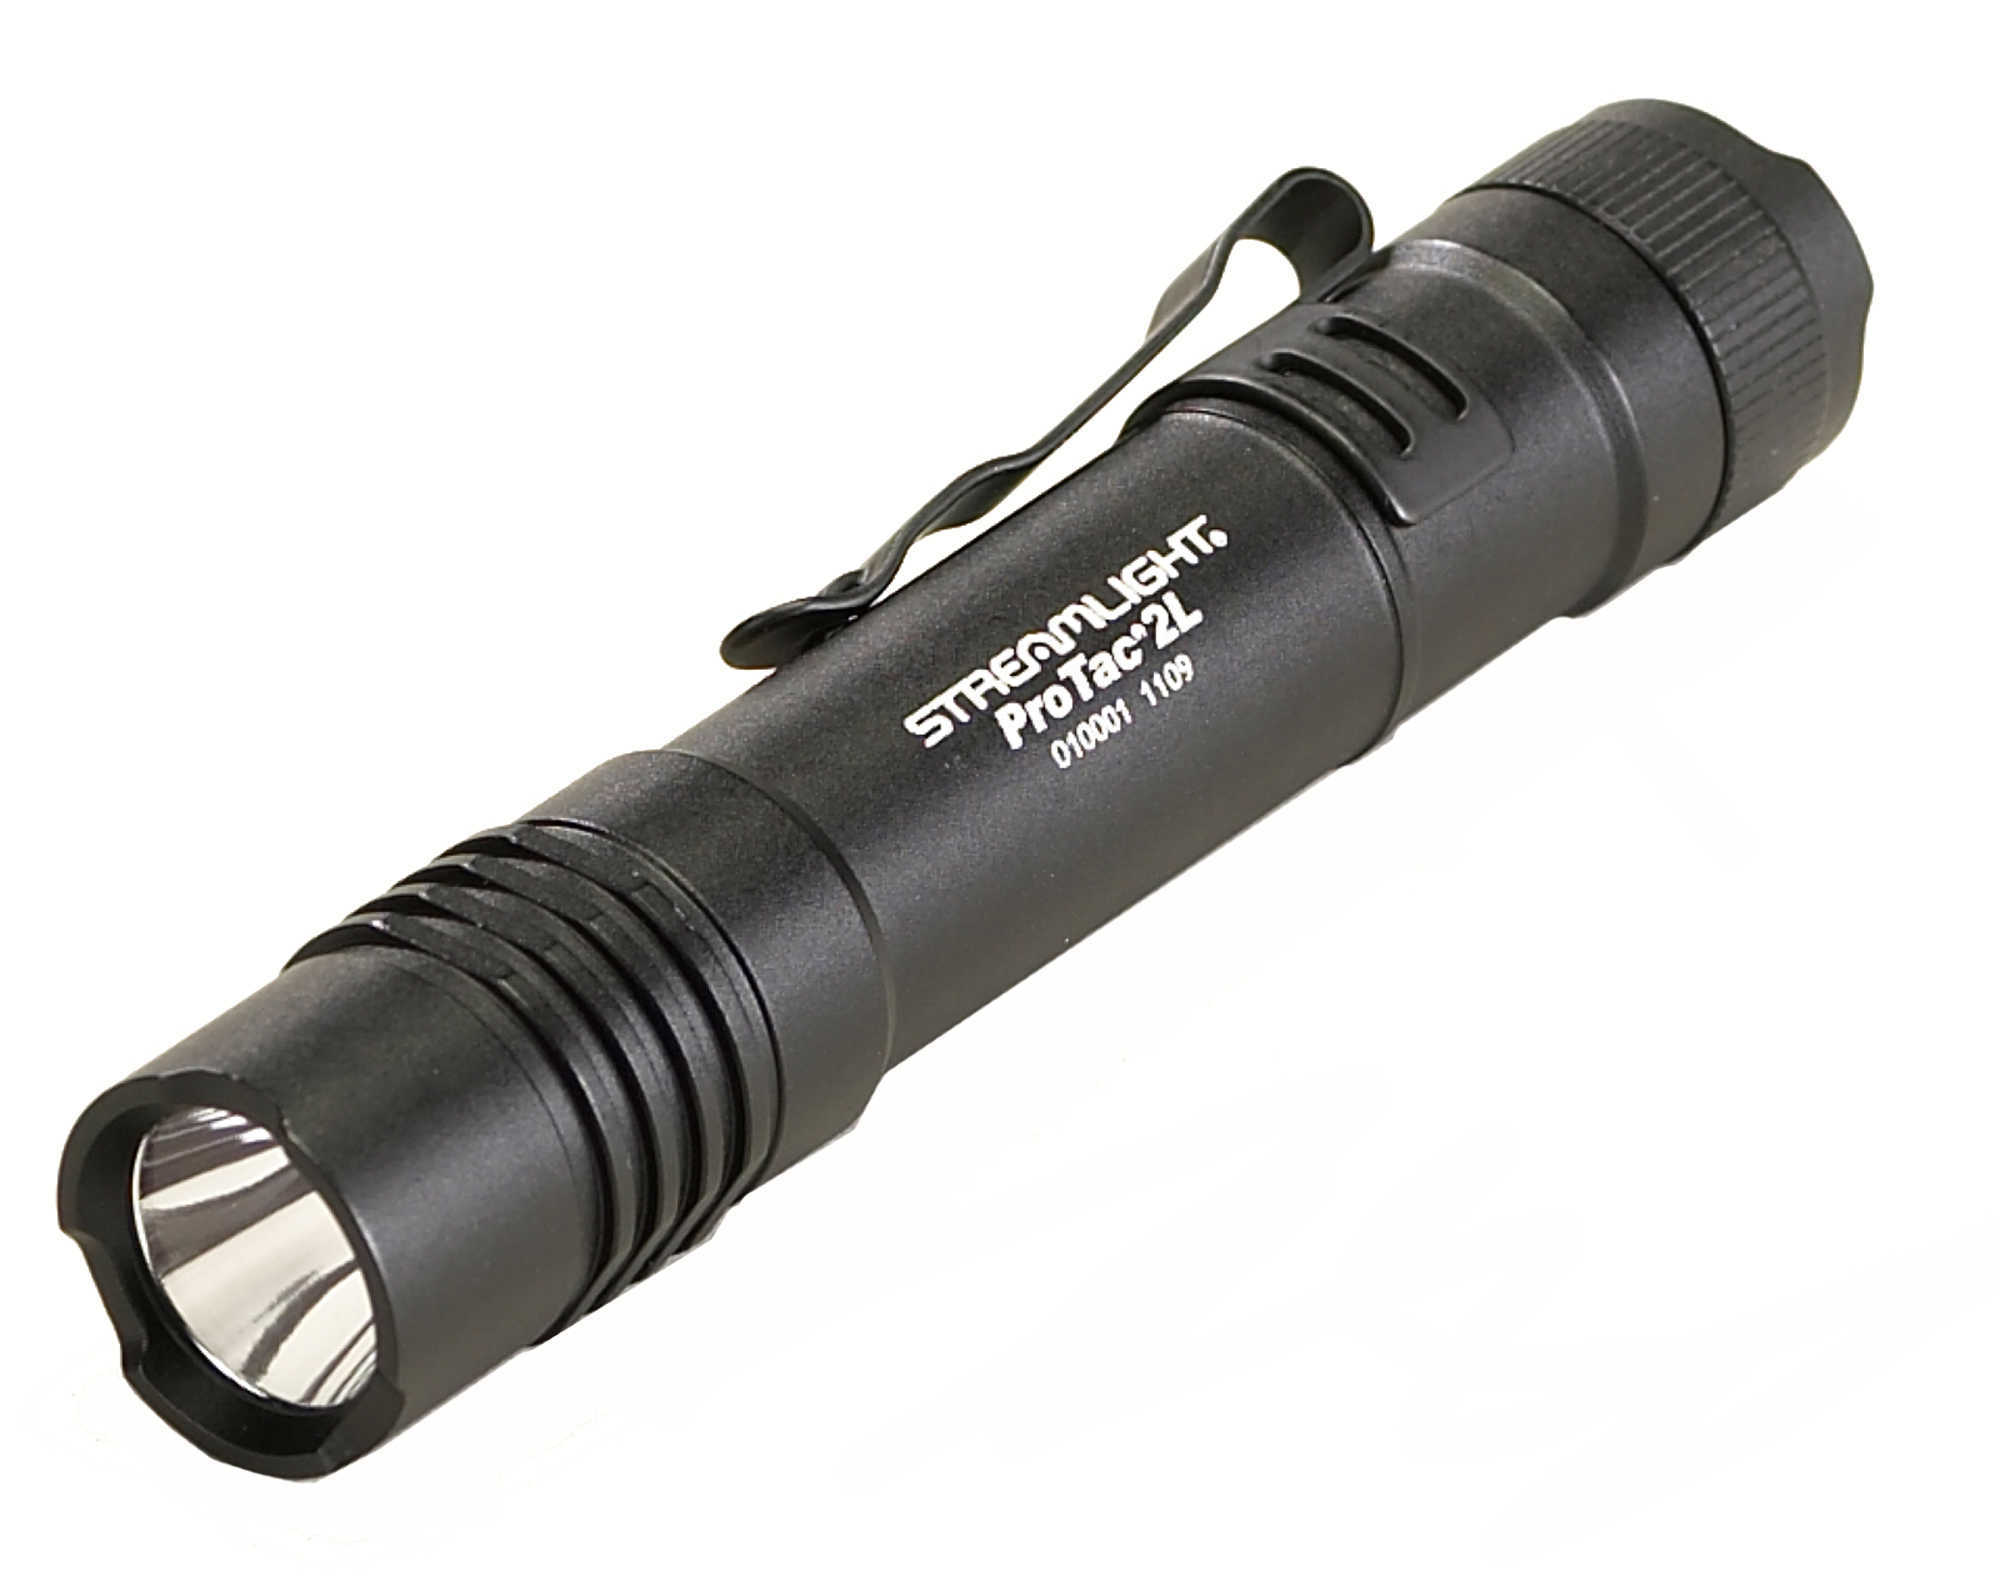 Streamlight PT 2L Led Tactical Light C4 - Modes & Run times: High (180 Lumens/2.5) Low (10 Lumens/50 Hrs) Strobe